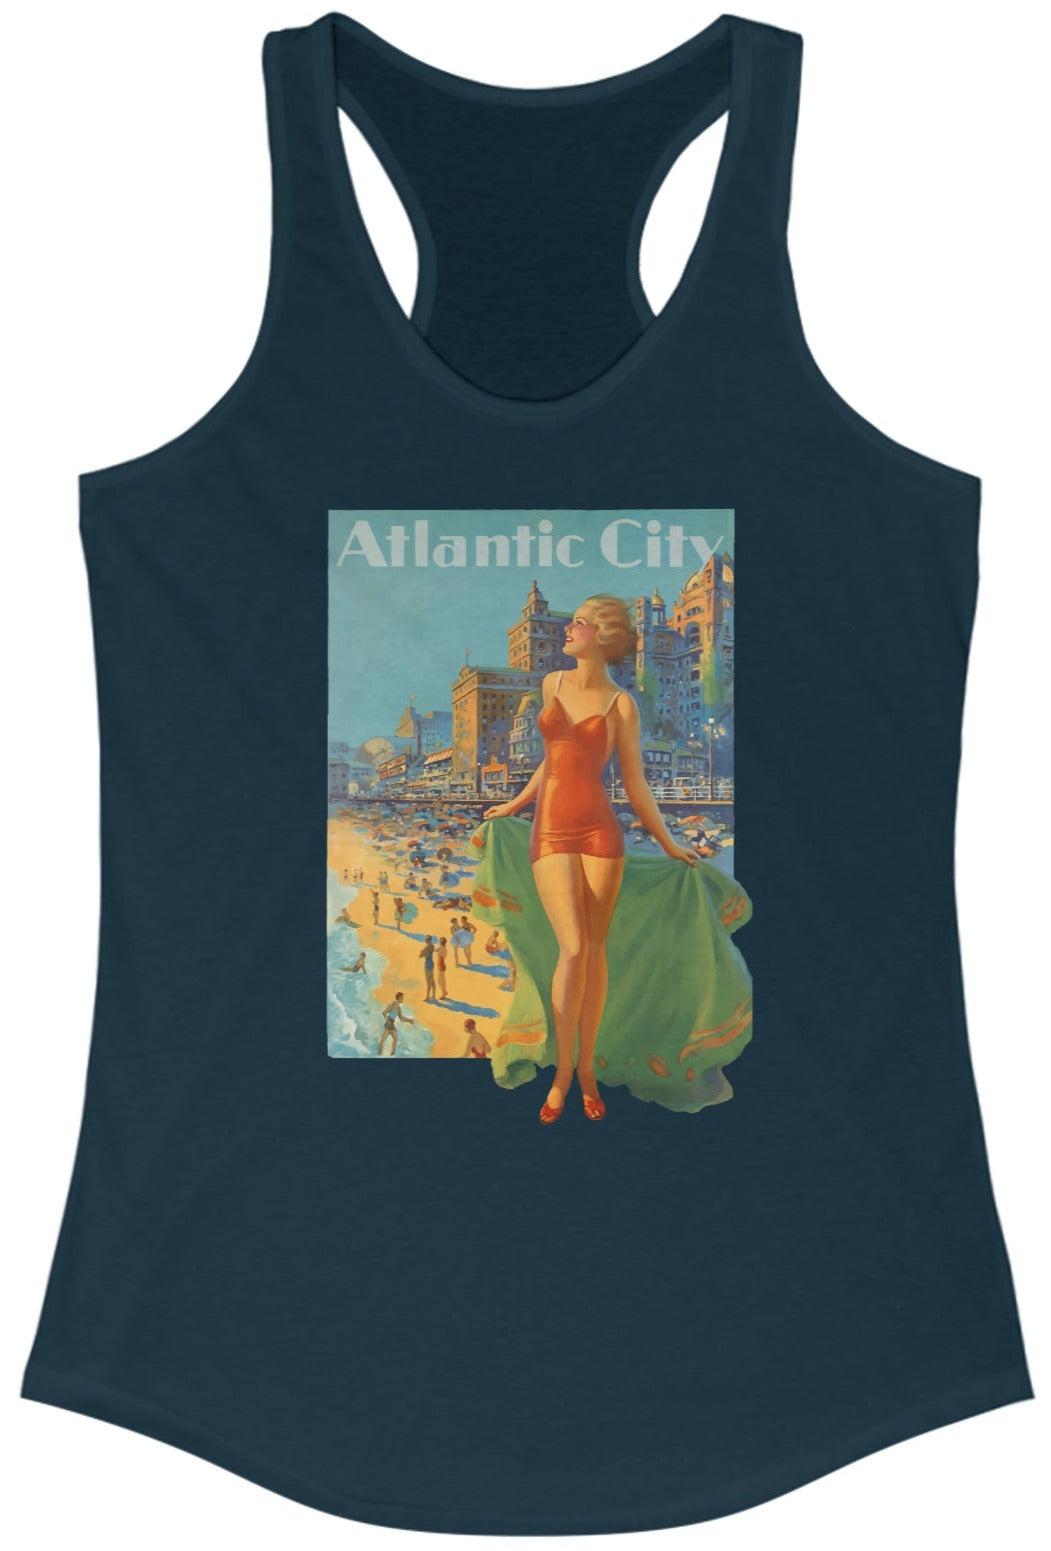 Atlantic City - Women's Racerback Tank